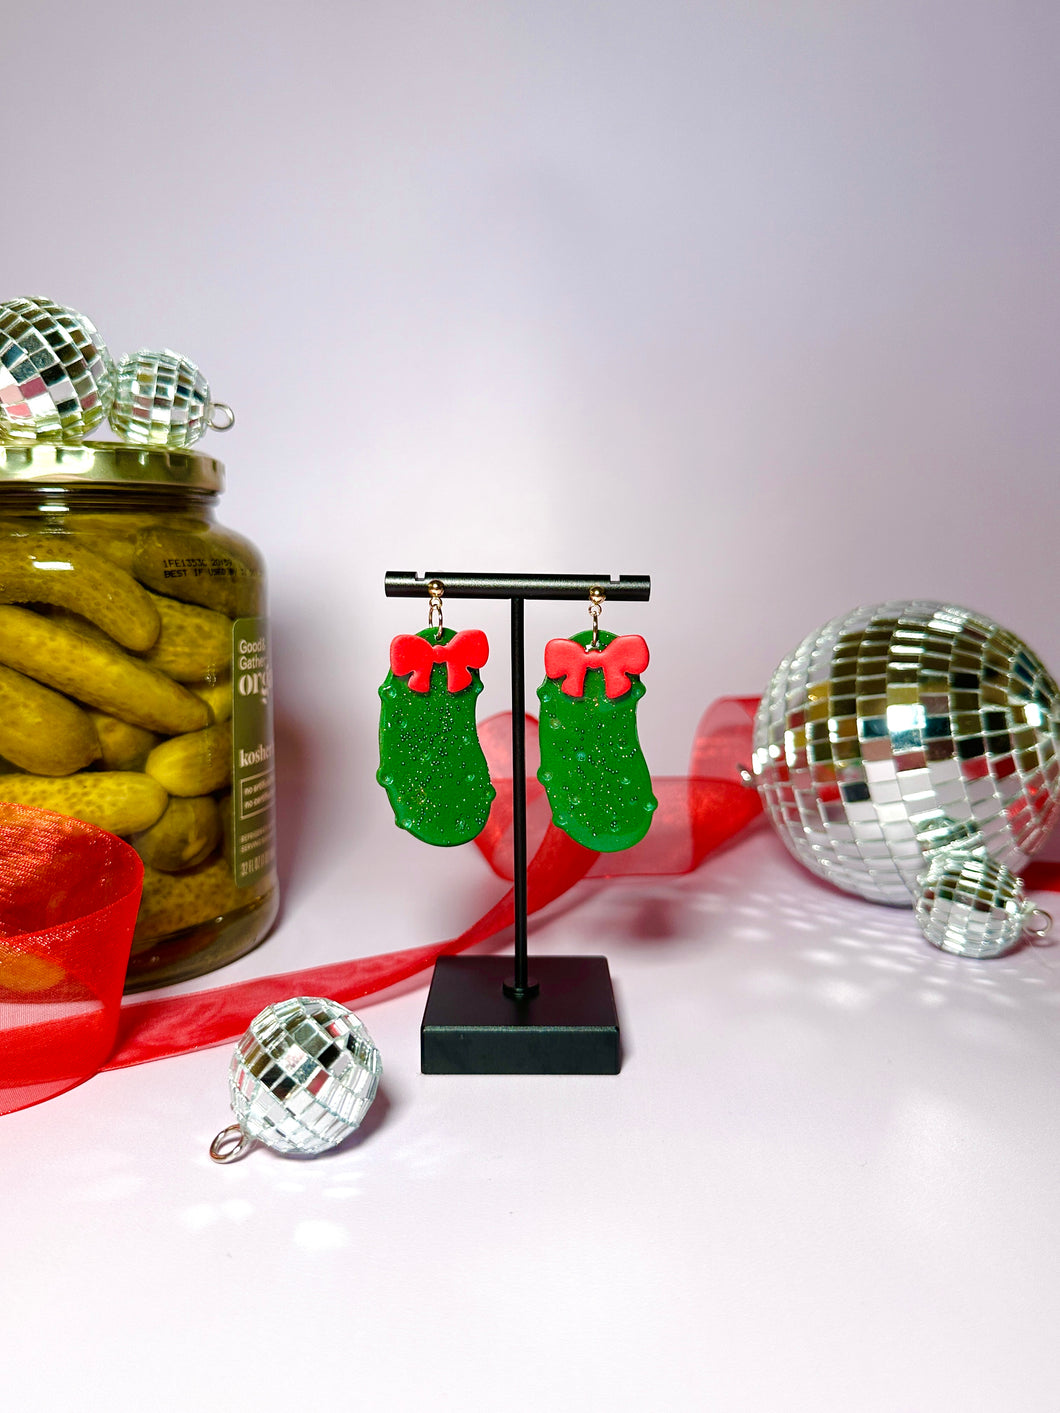 Christmas Pickles